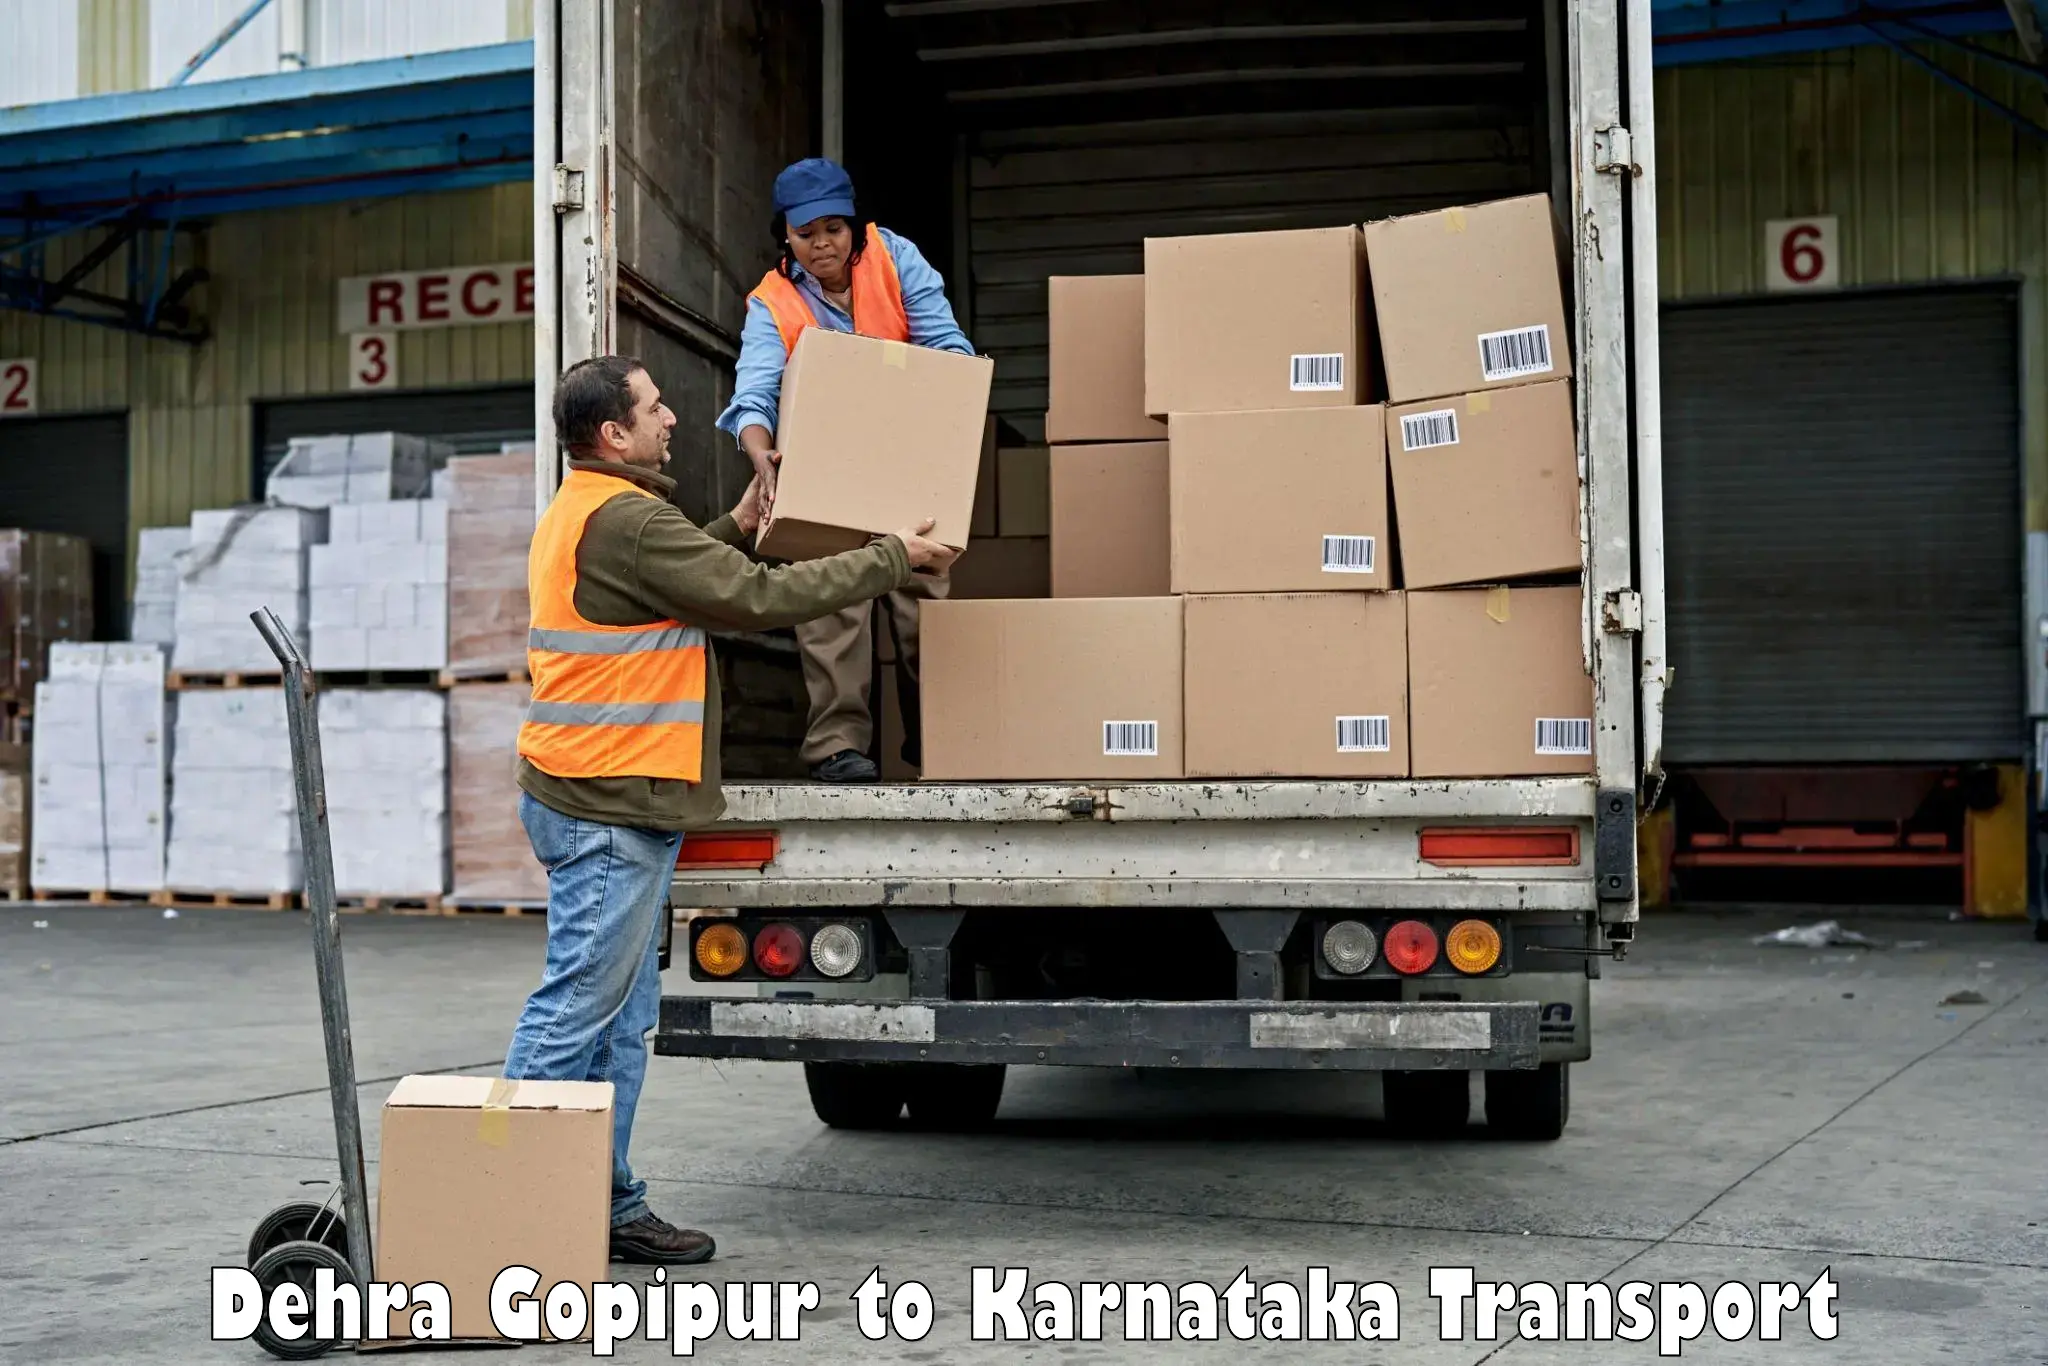 Online transport service Dehra Gopipur to Manipal